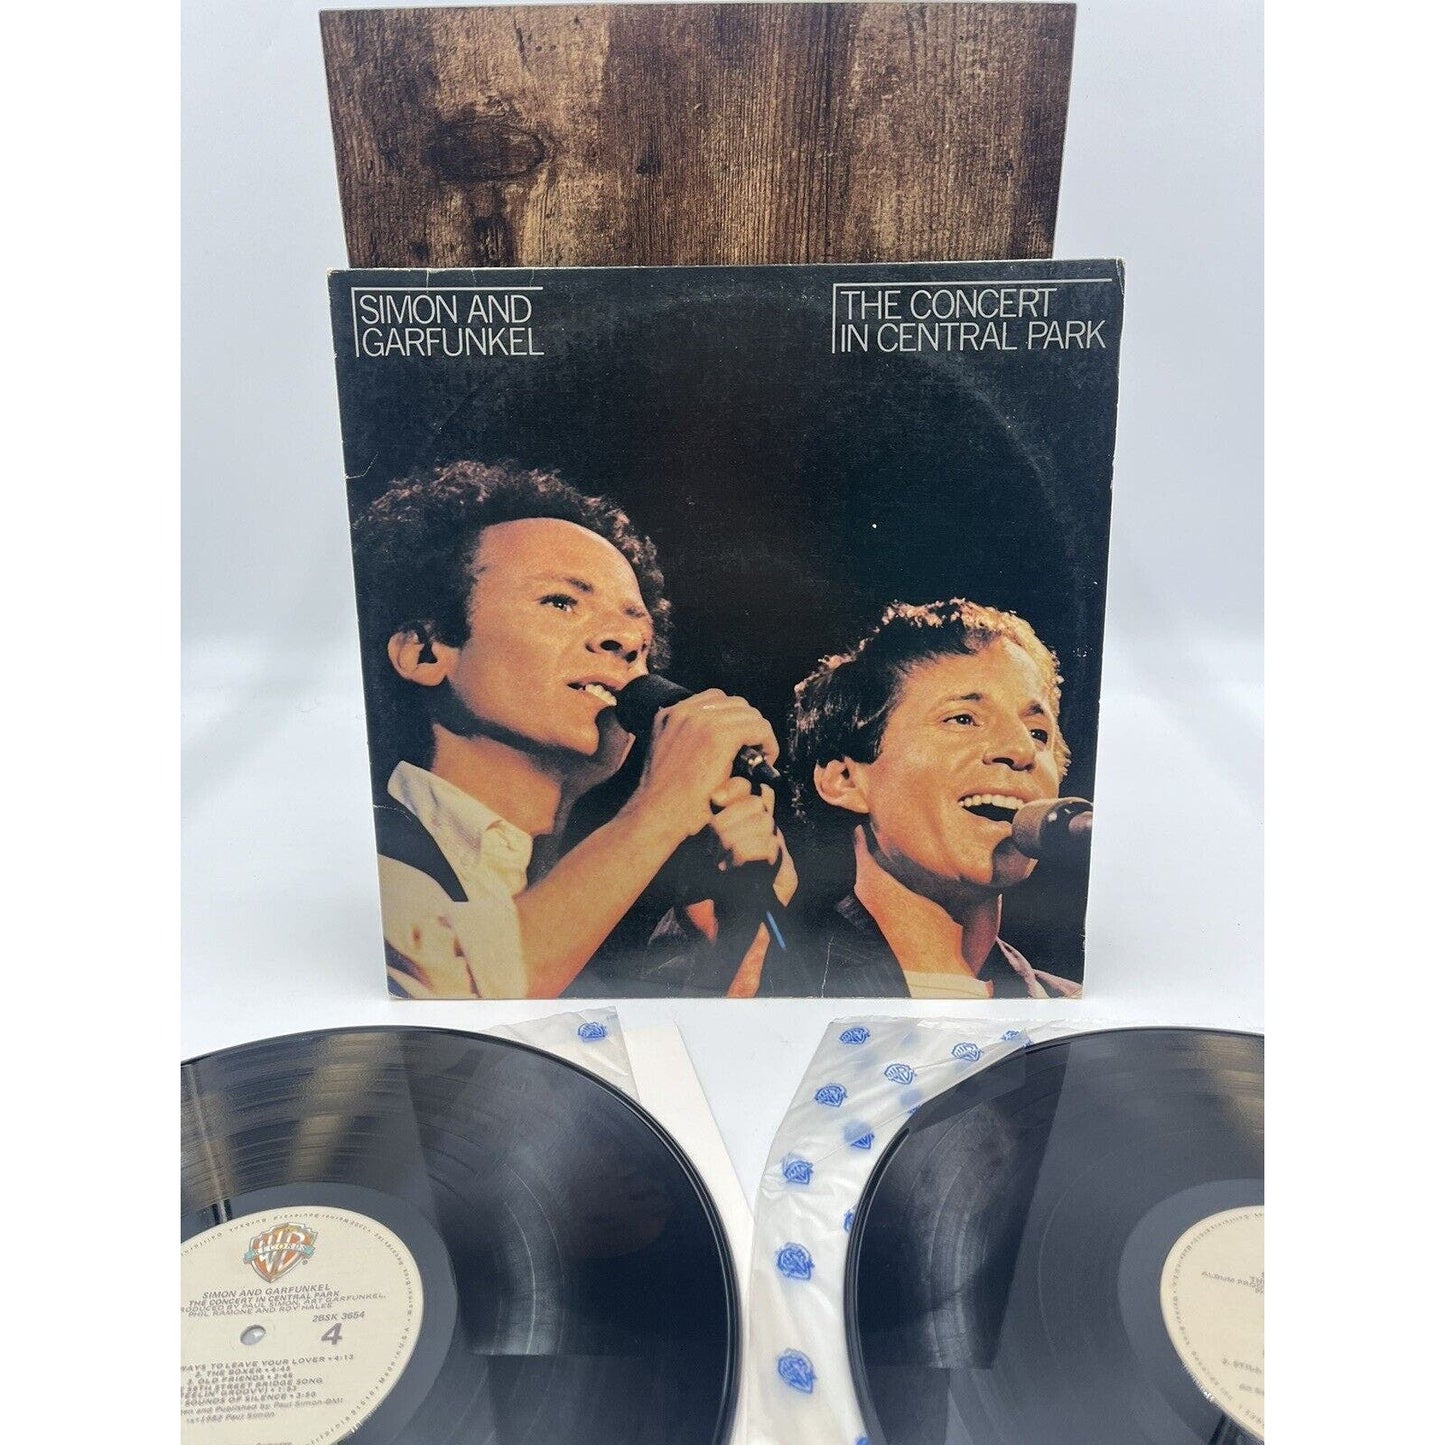 Simon and Garfunkel "The Concert in Central Park" 2LP, 1982. Vinyl VG+